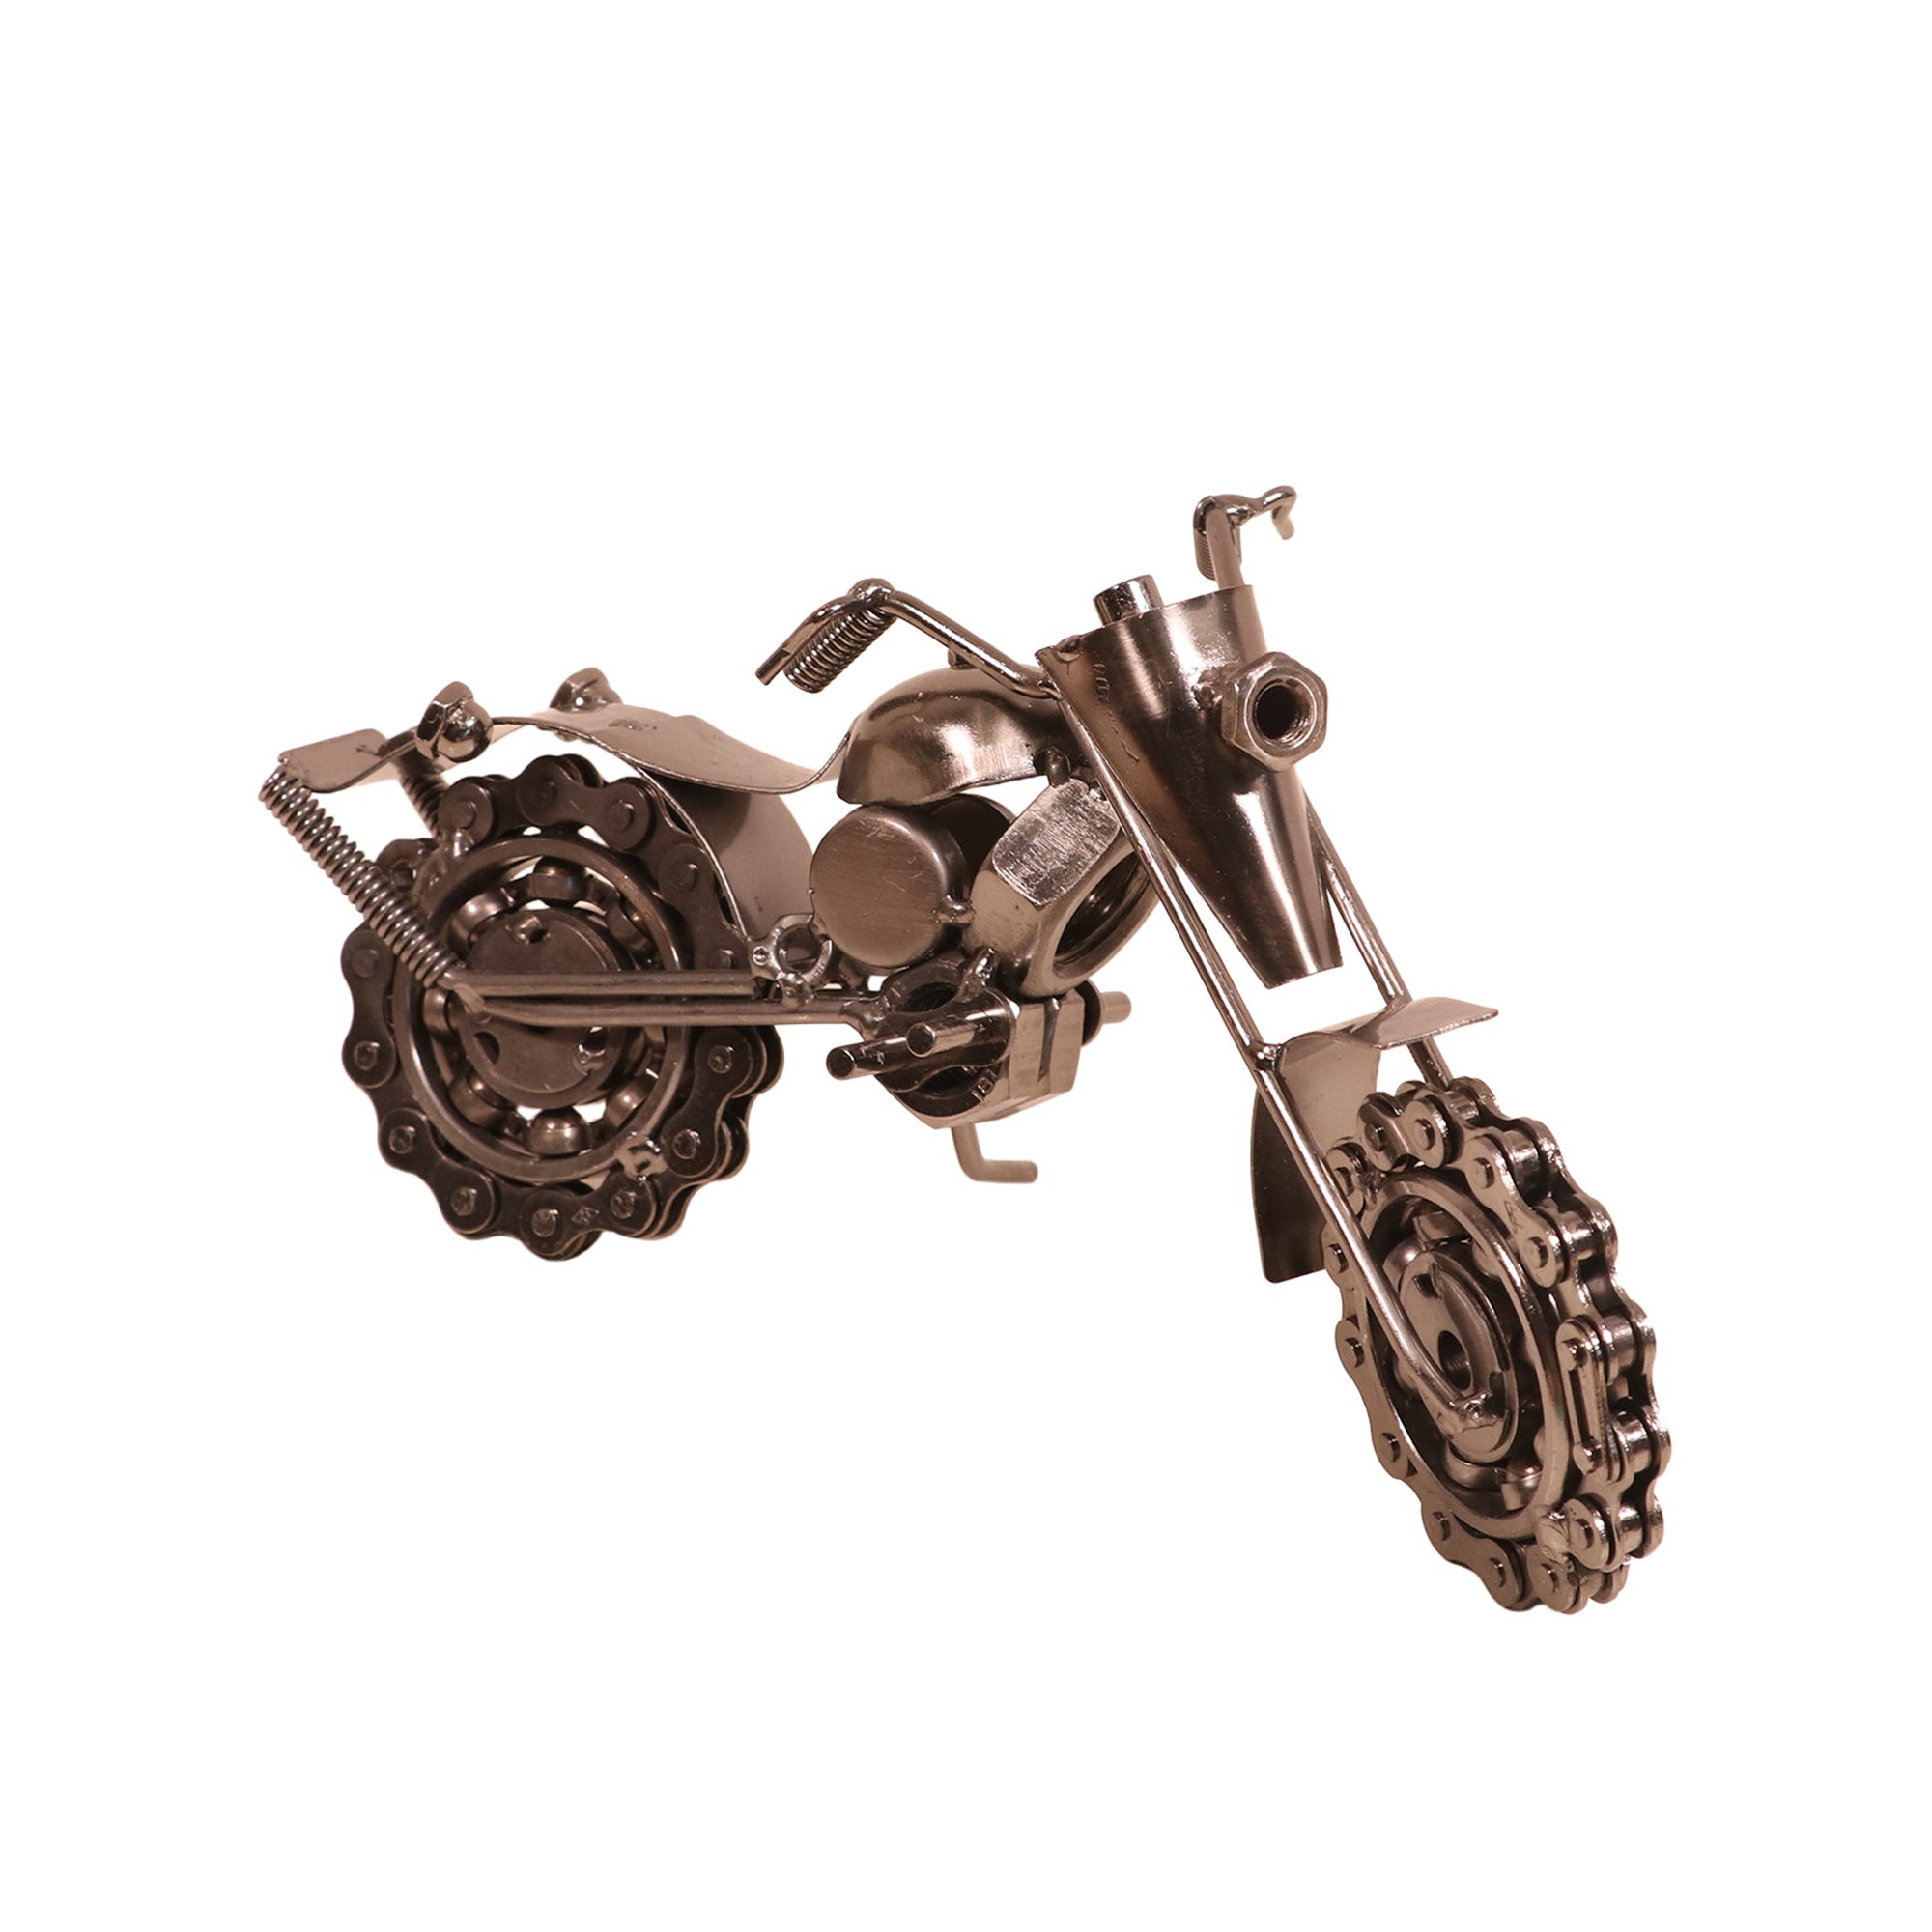 Metallic American dream bike Miniature Vehicle figurine